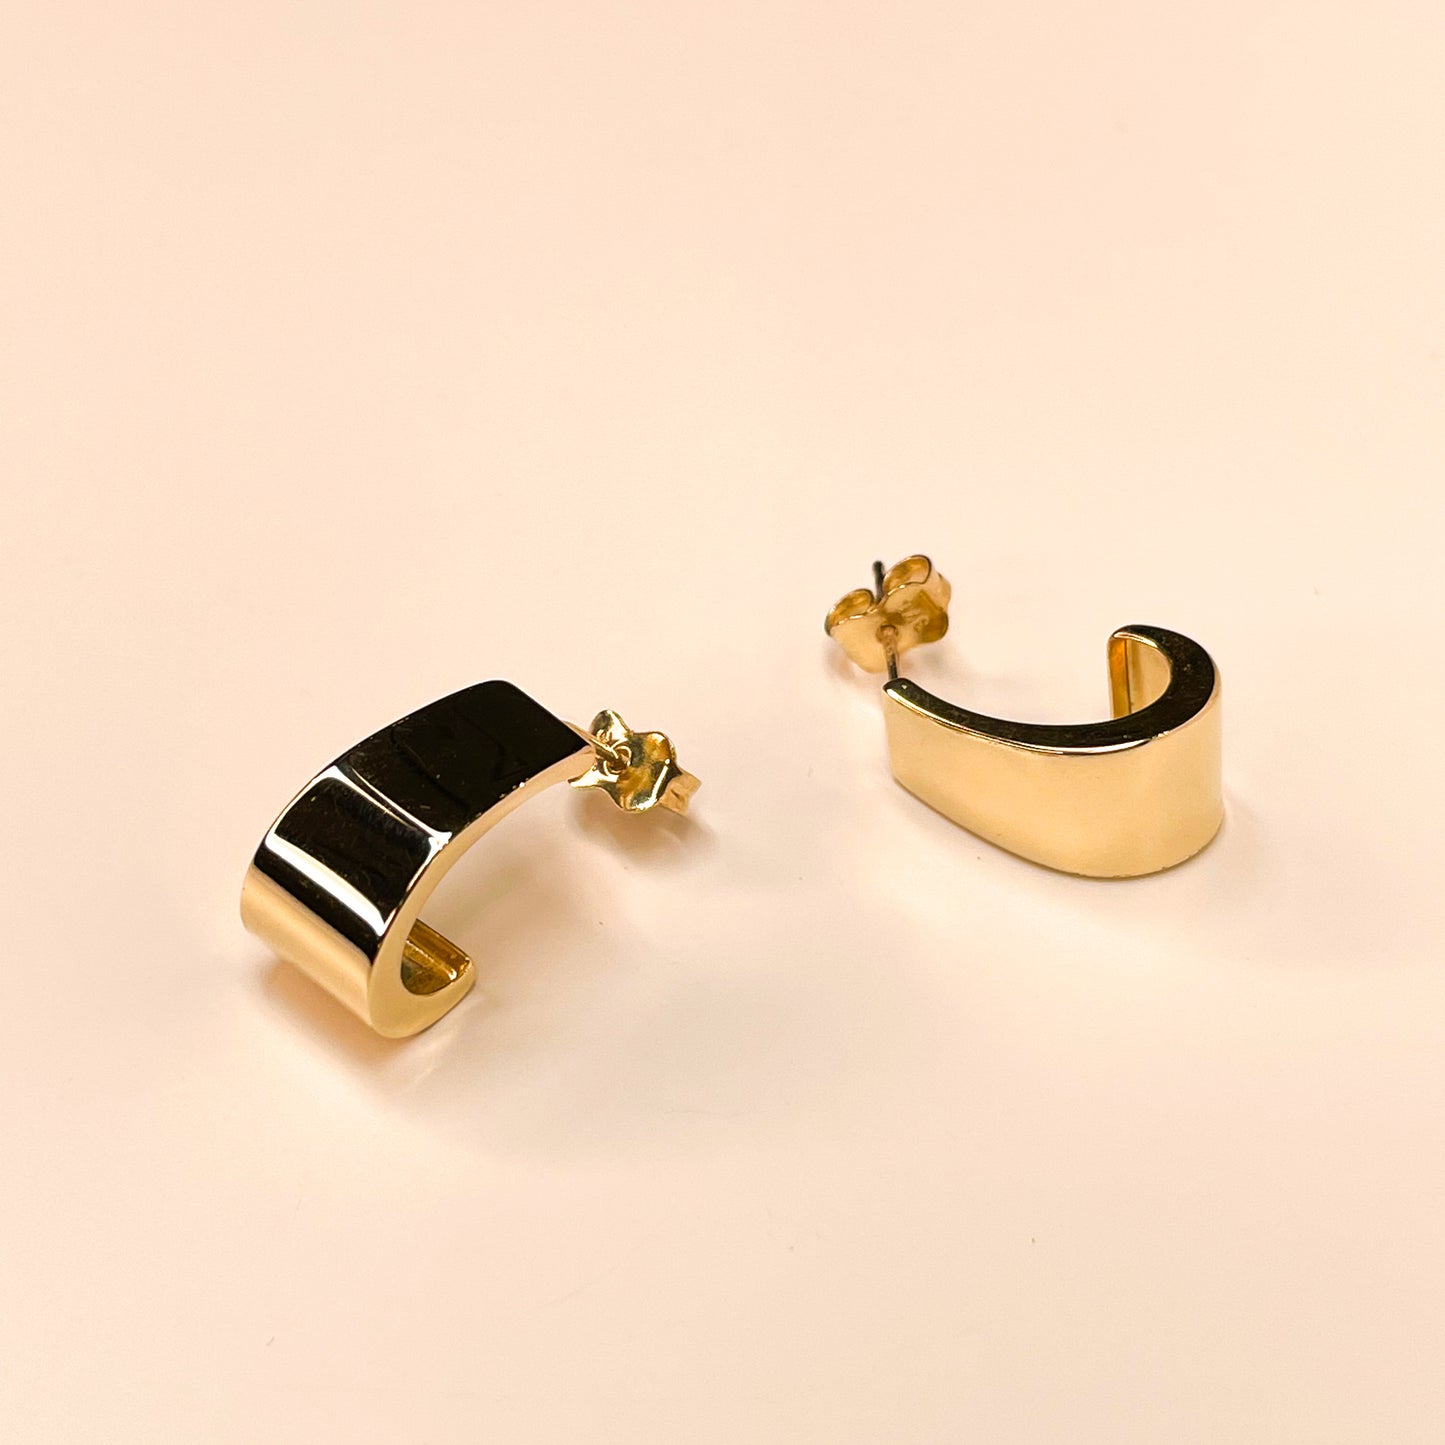 9ct Gold Tapered Hoop Earrings | 15mm - John Ross Jewellers